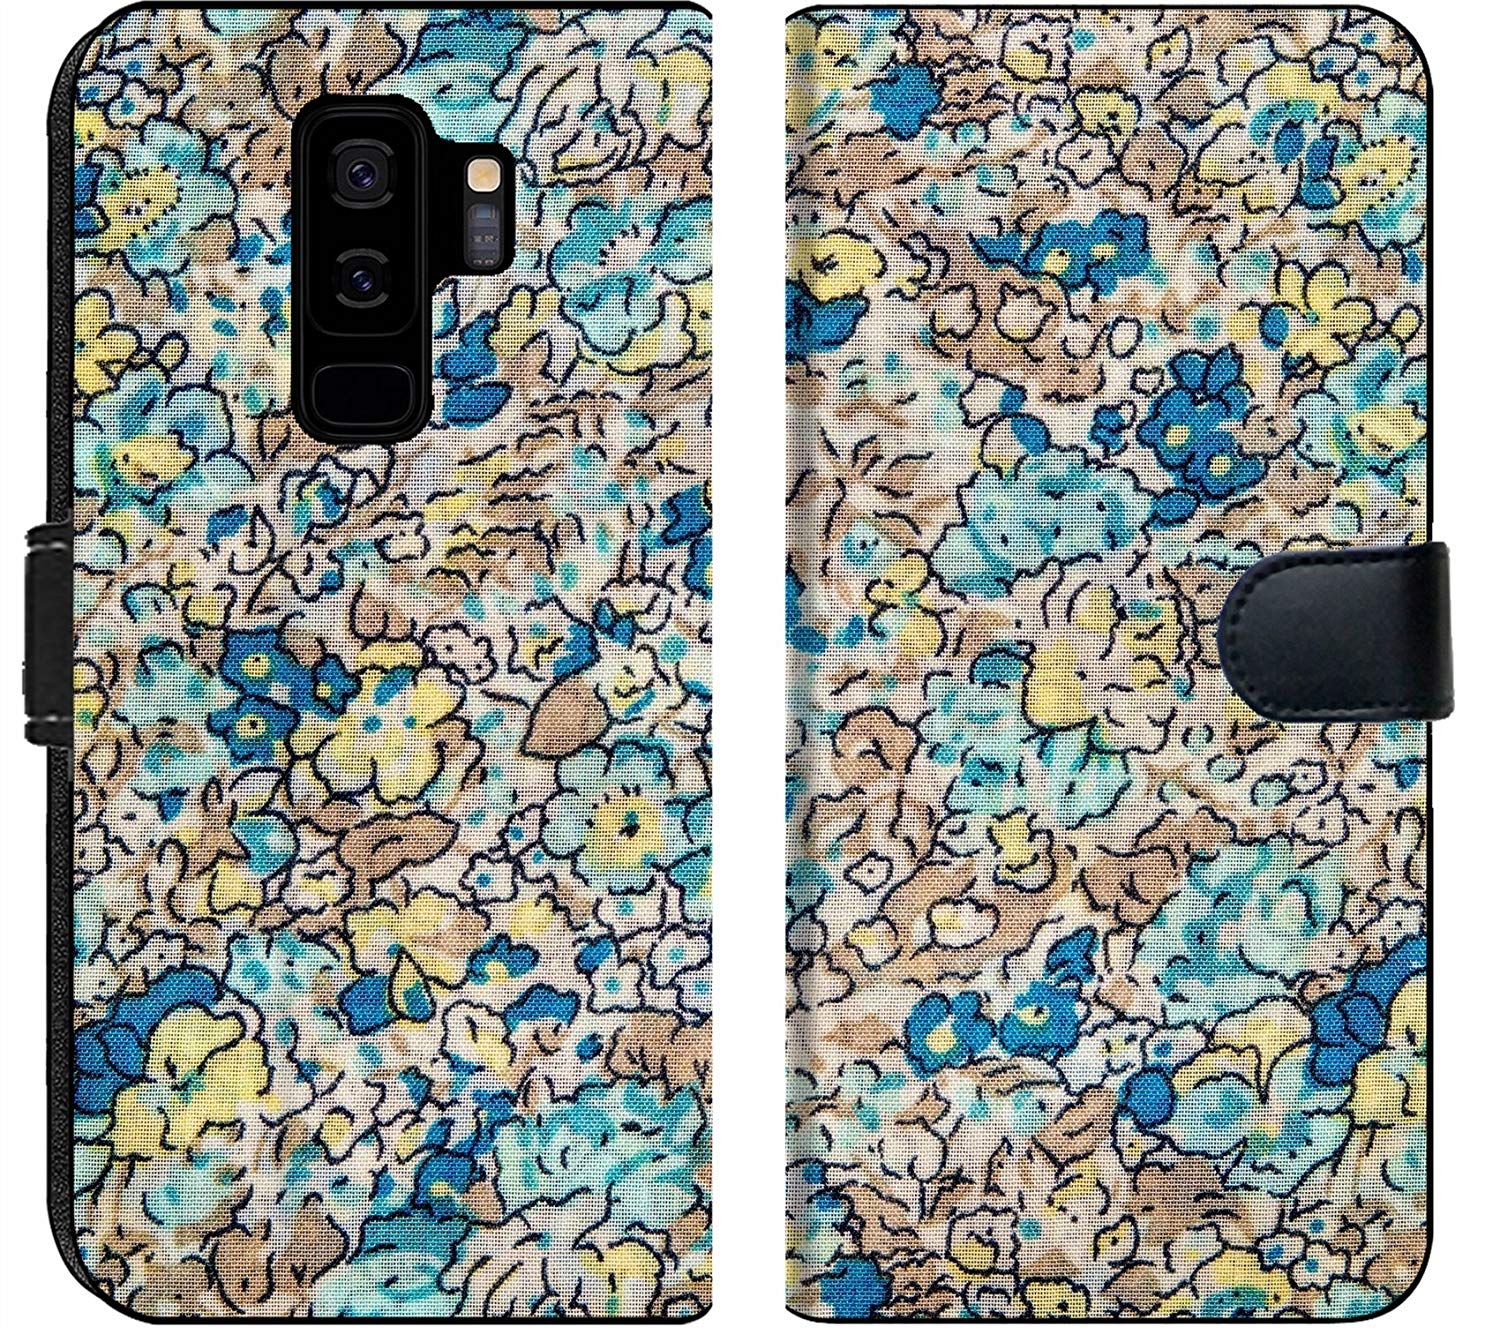 Mobile Phone Case - HD Wallpaper 